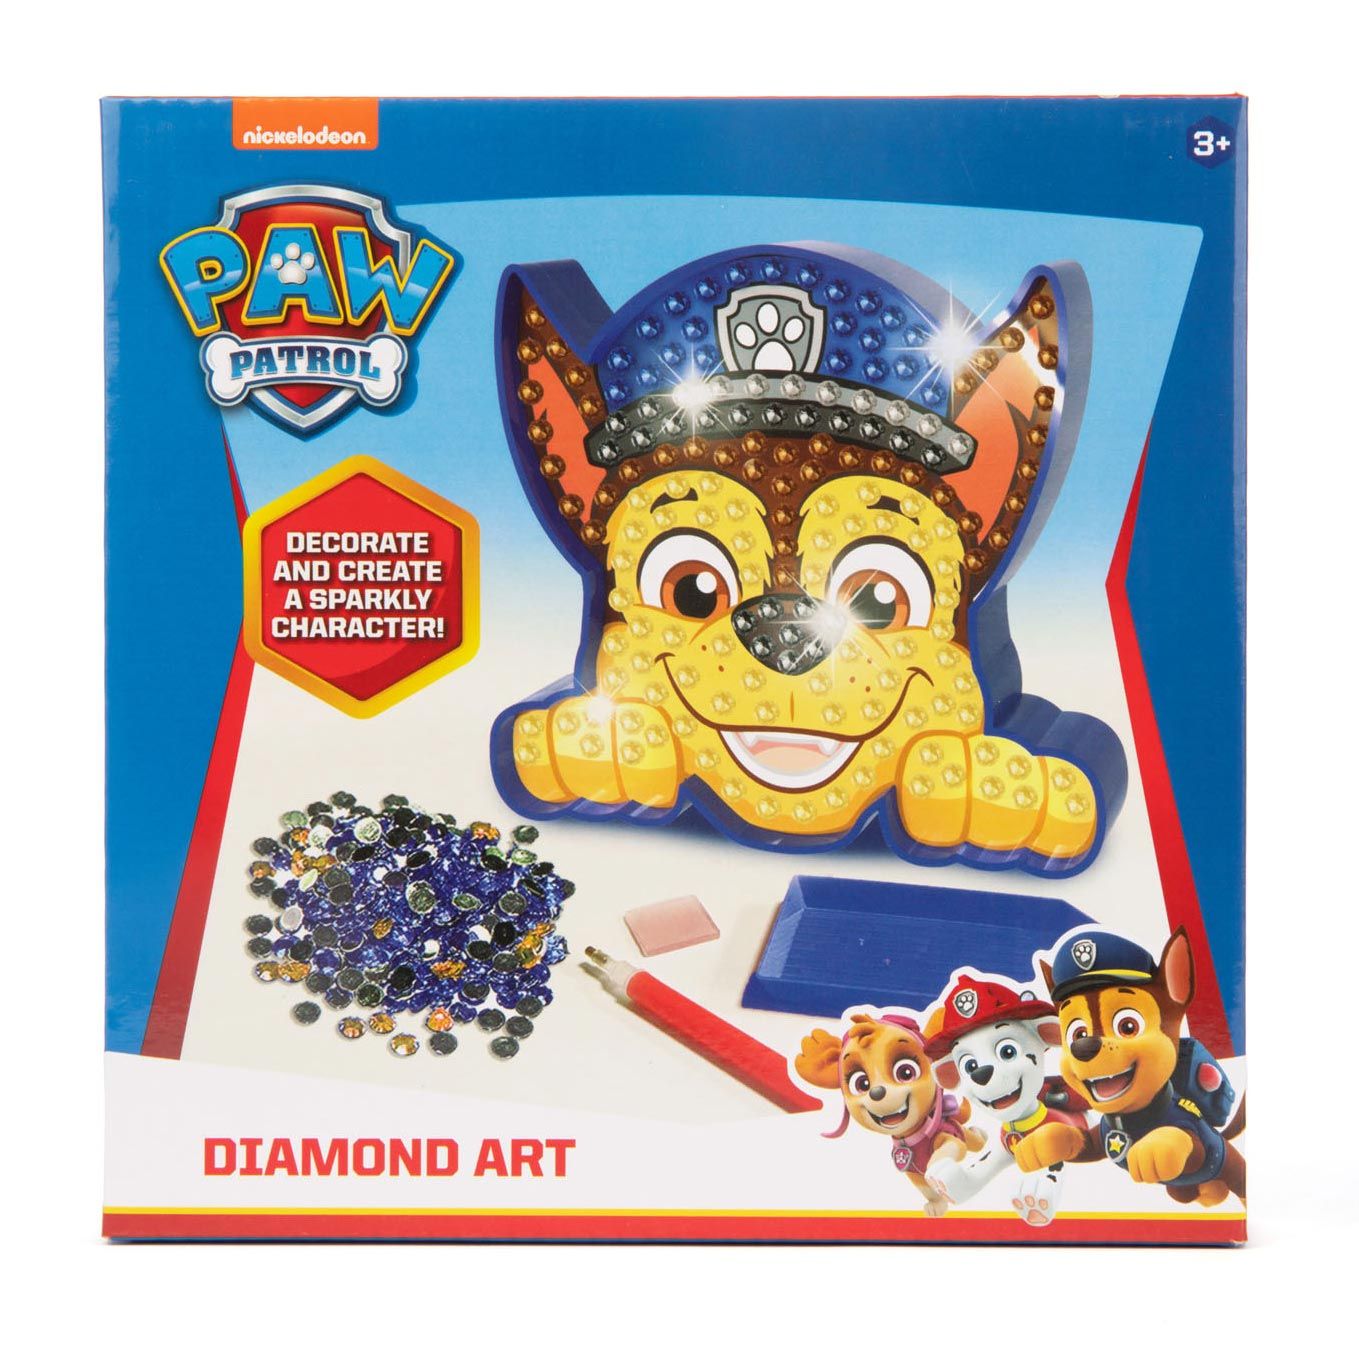 https://www.jouet-plus.com/media/catalog/product/cache/b53f5701c29652b6c3eaff90fe1214f0/image/142862b223/sambro-paw-patrol-diamond-painting-art-chase-pwp22-5724-1.jpg